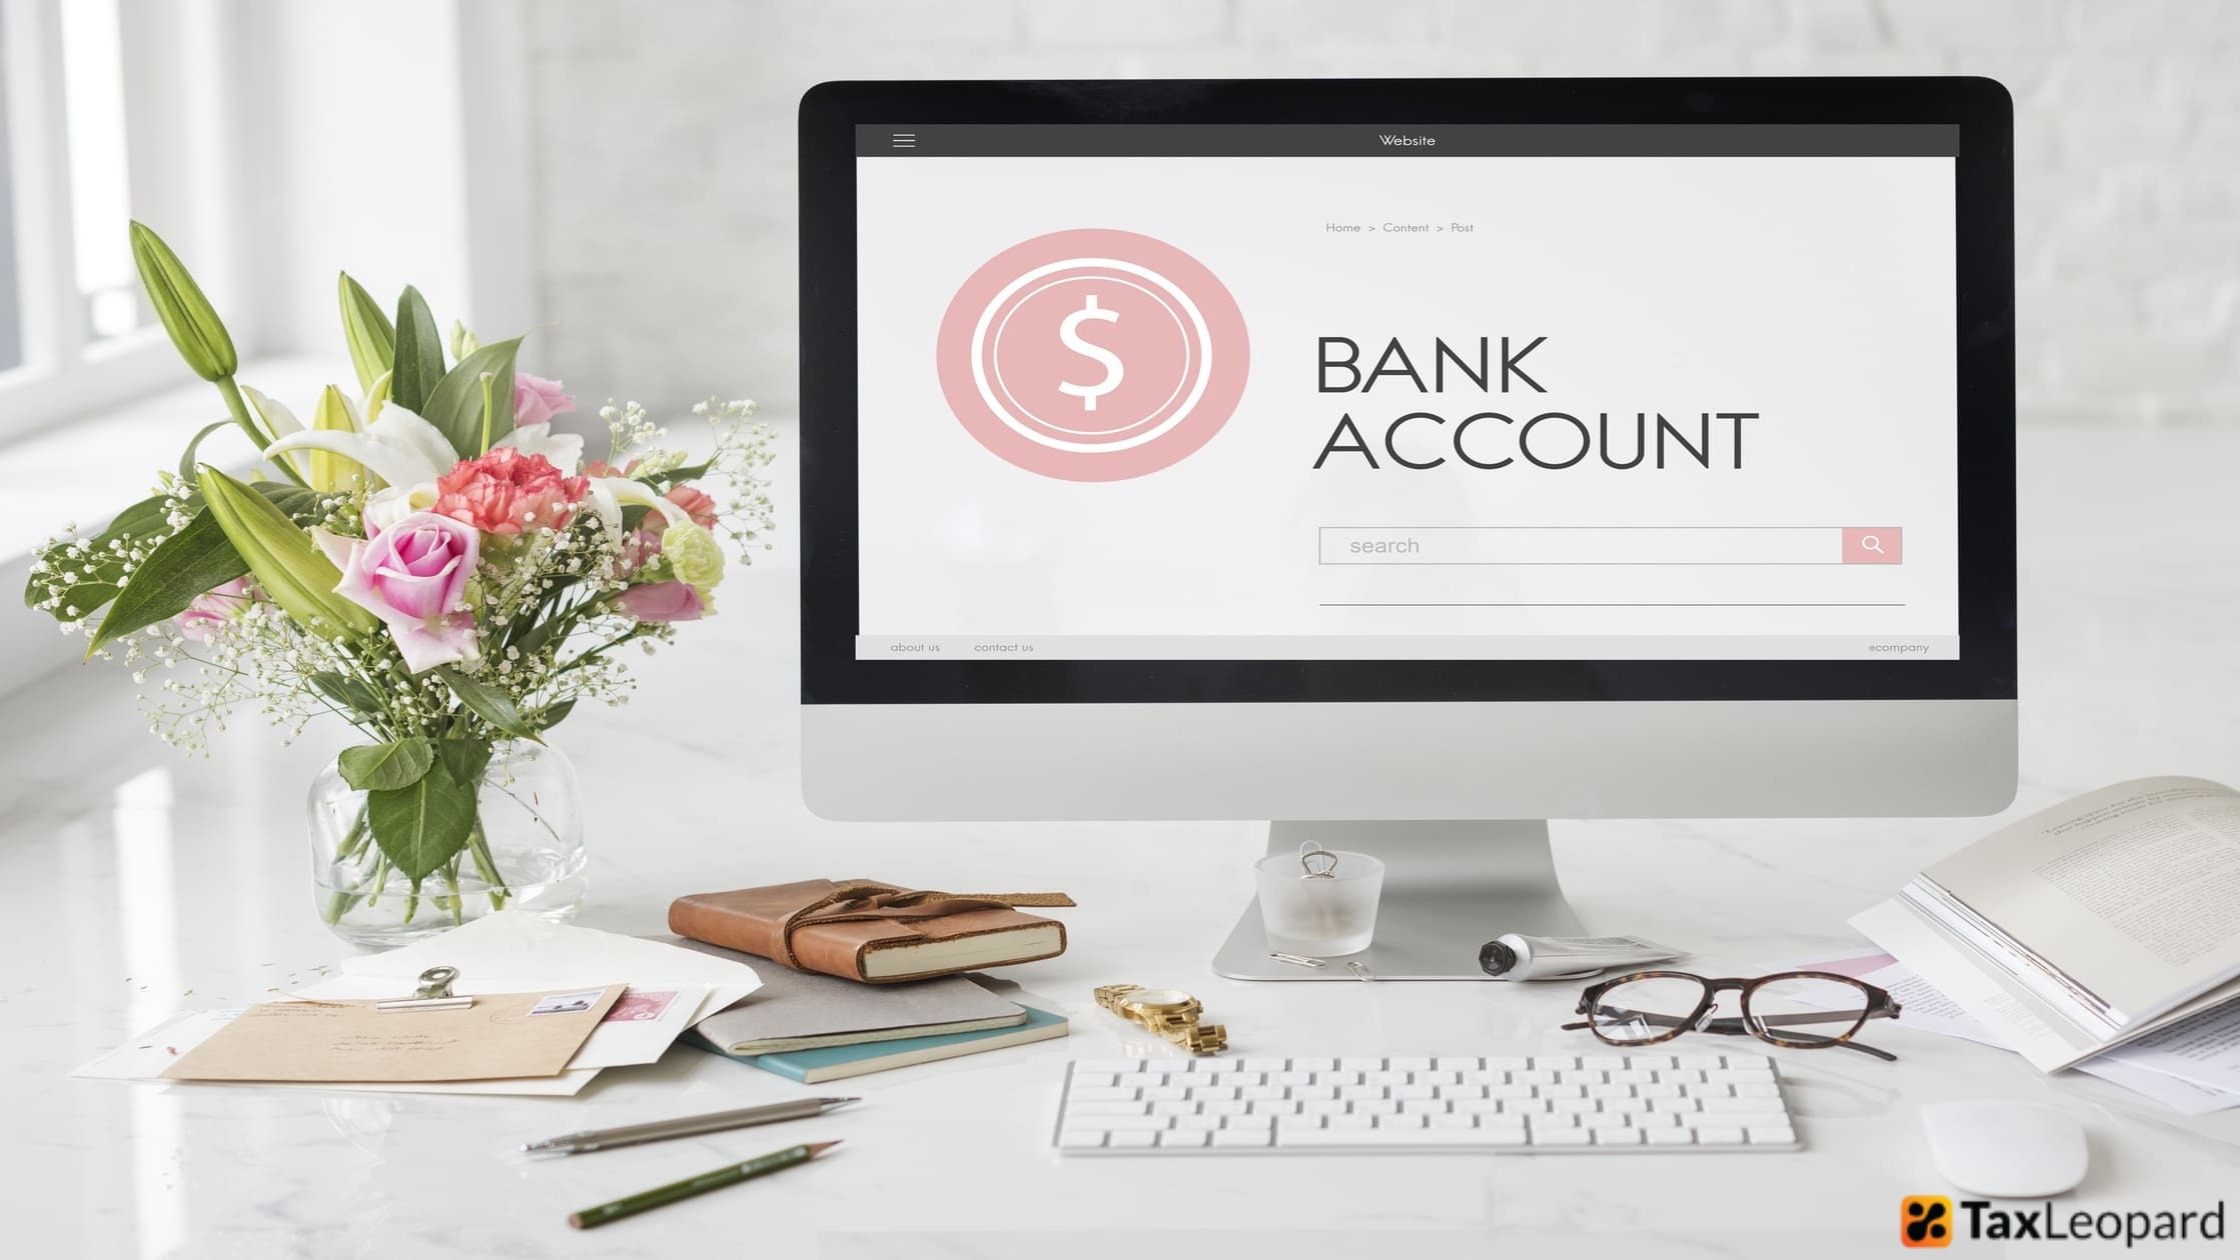 Best Business Bank Accounts